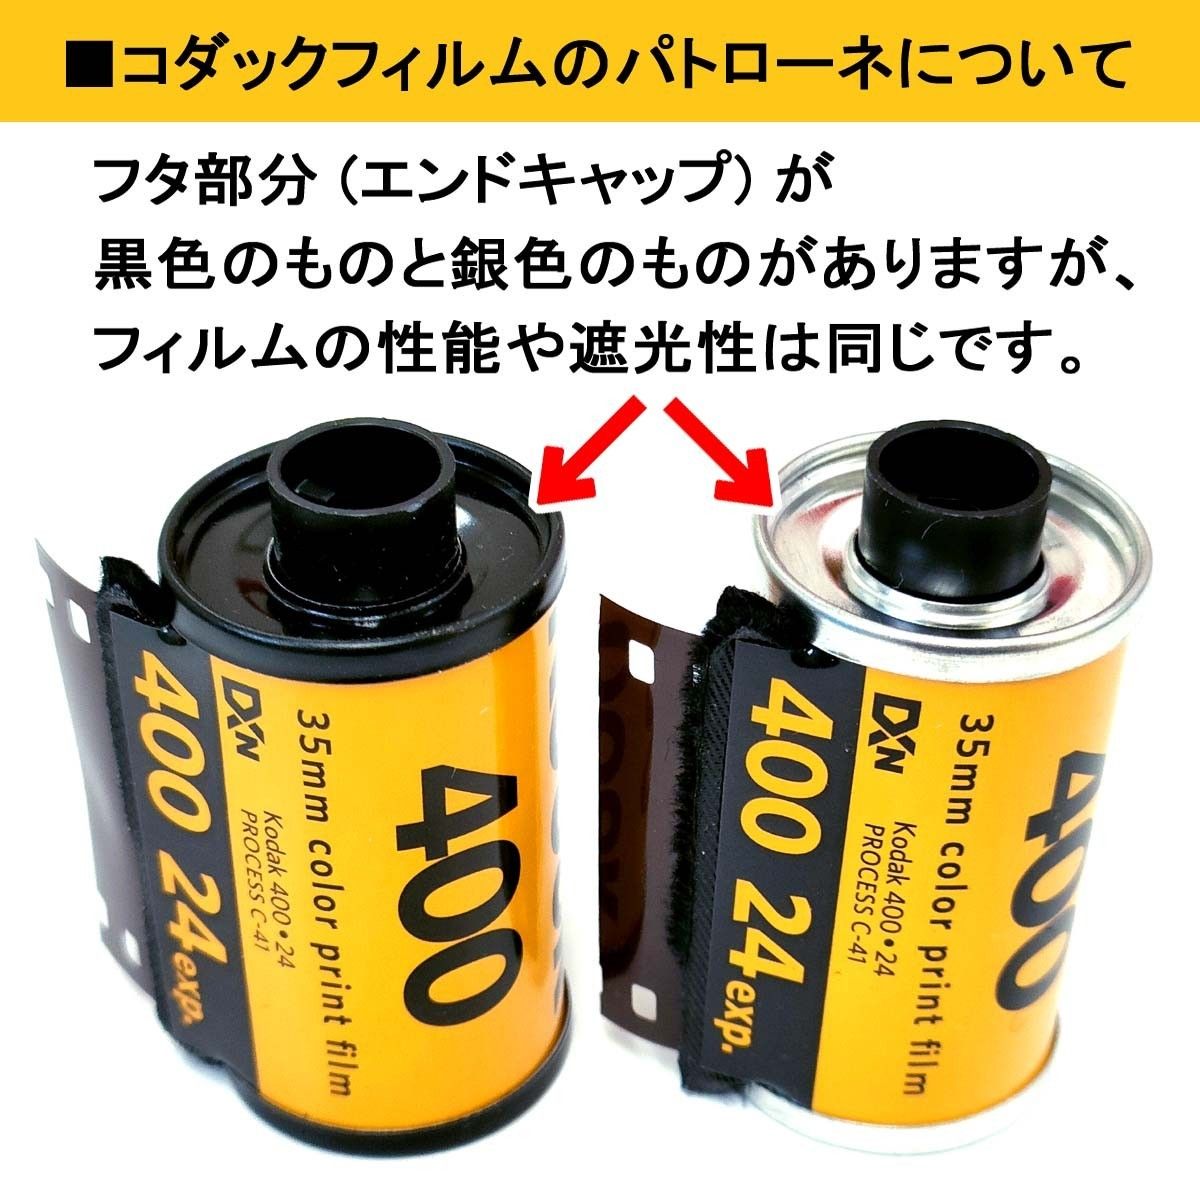 ULTRA MAX 400-24枚撮【1本】Kodak カラーネガフィルム 135/35mm コダック 0086806034029